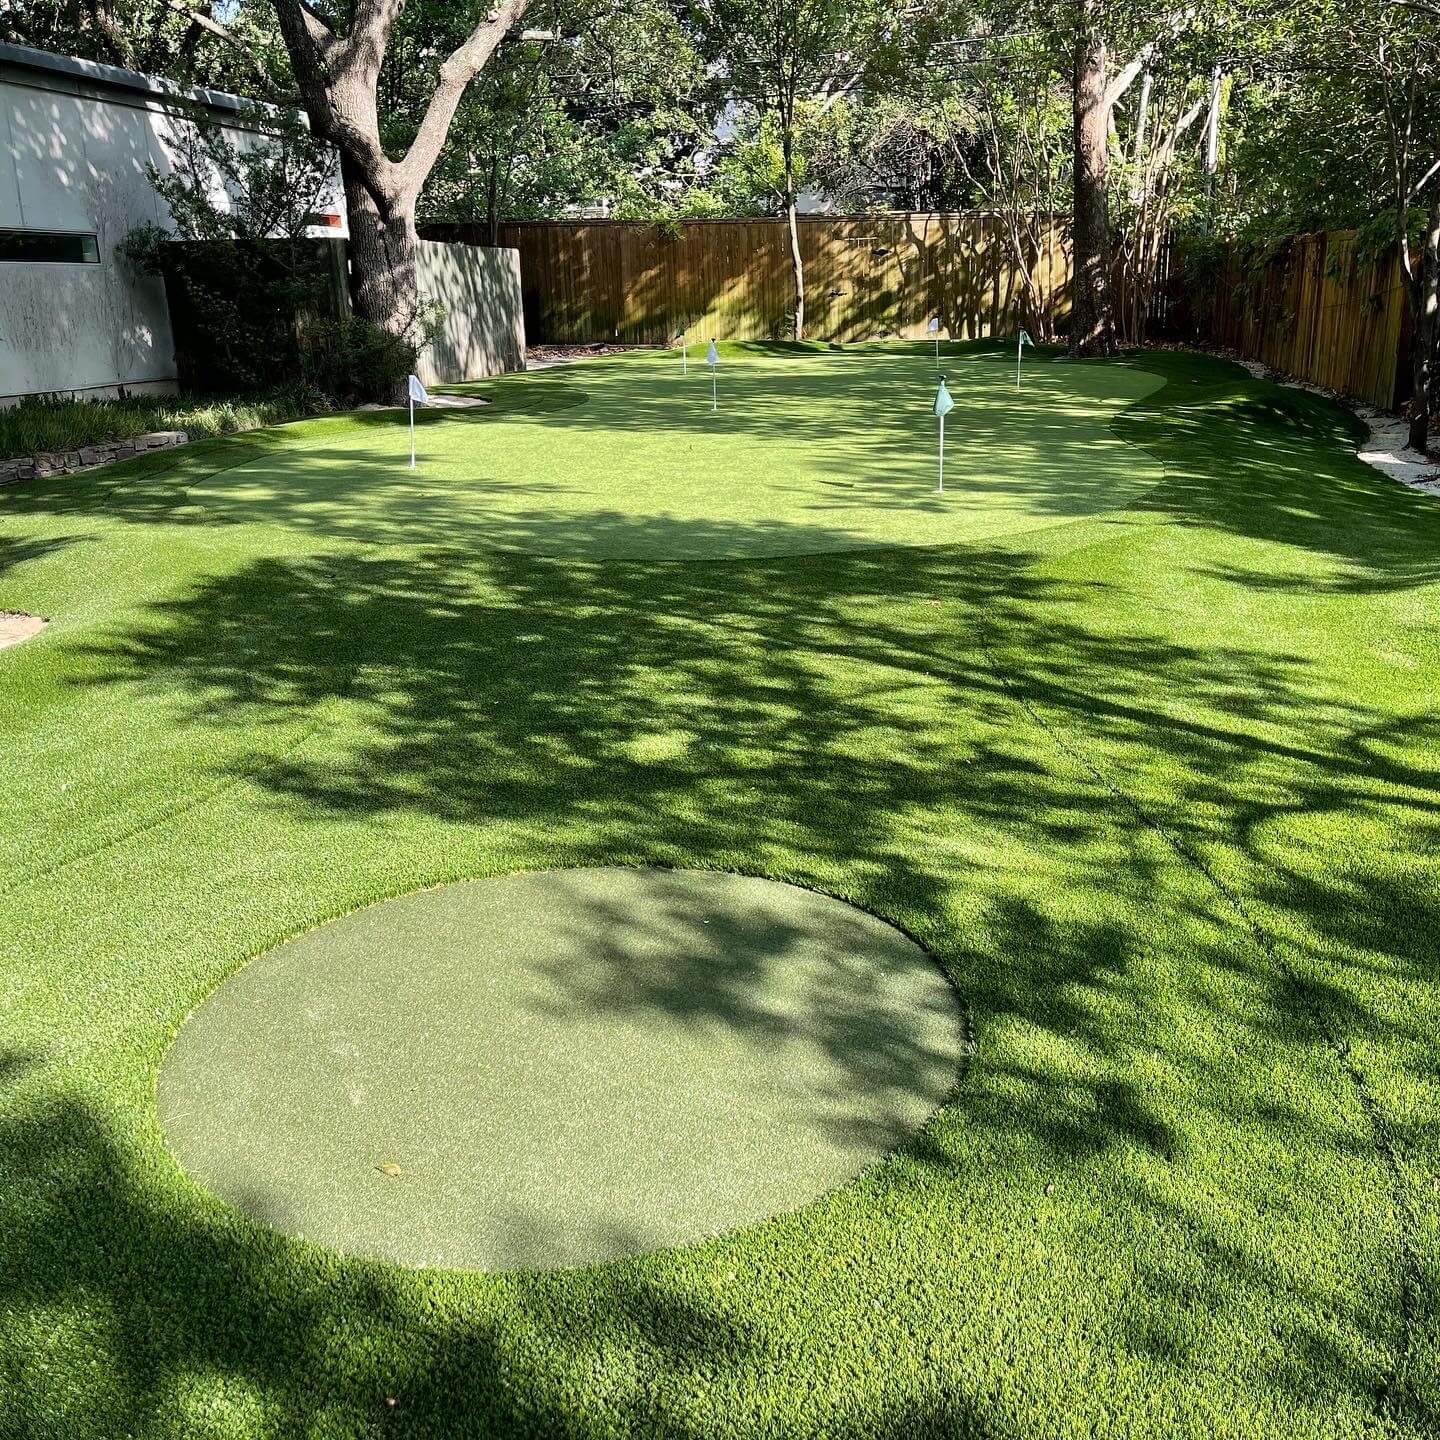 Alternate angle of shaded backyard putting green